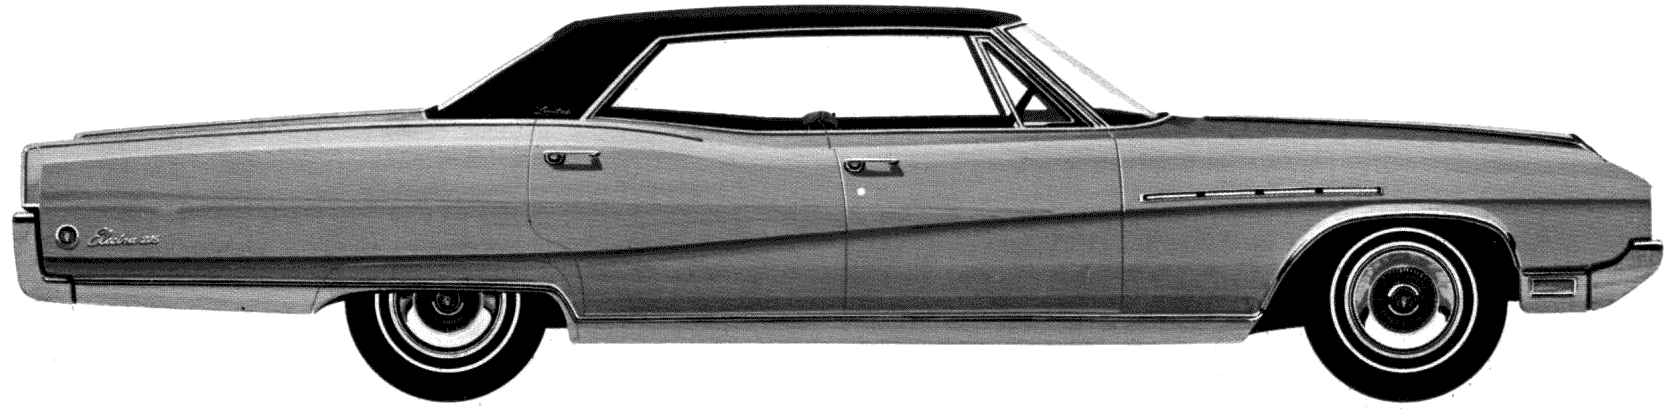 Mašīna Buick Electra 225 Limited 4-Door Hardtop 1968 